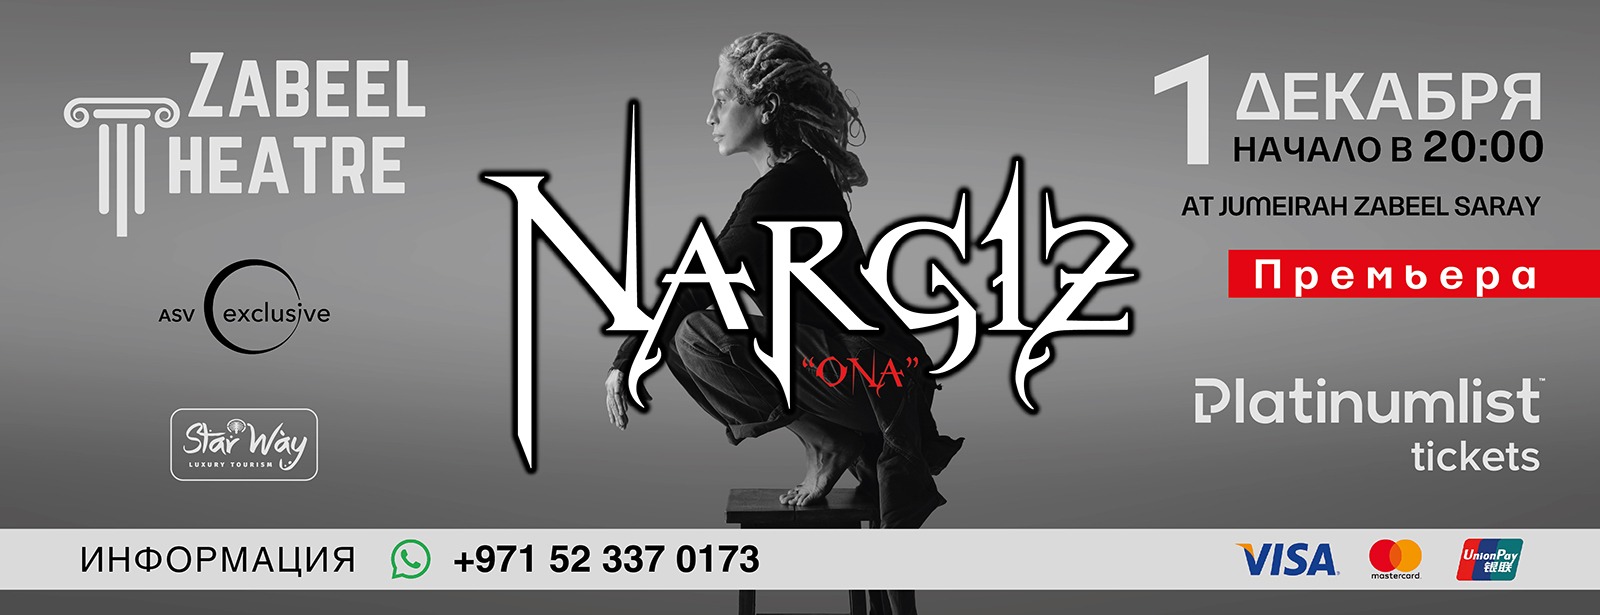 NARGIZ / Наргиз at Zabeel Theatre, Dubai - Coming Soon in UAE